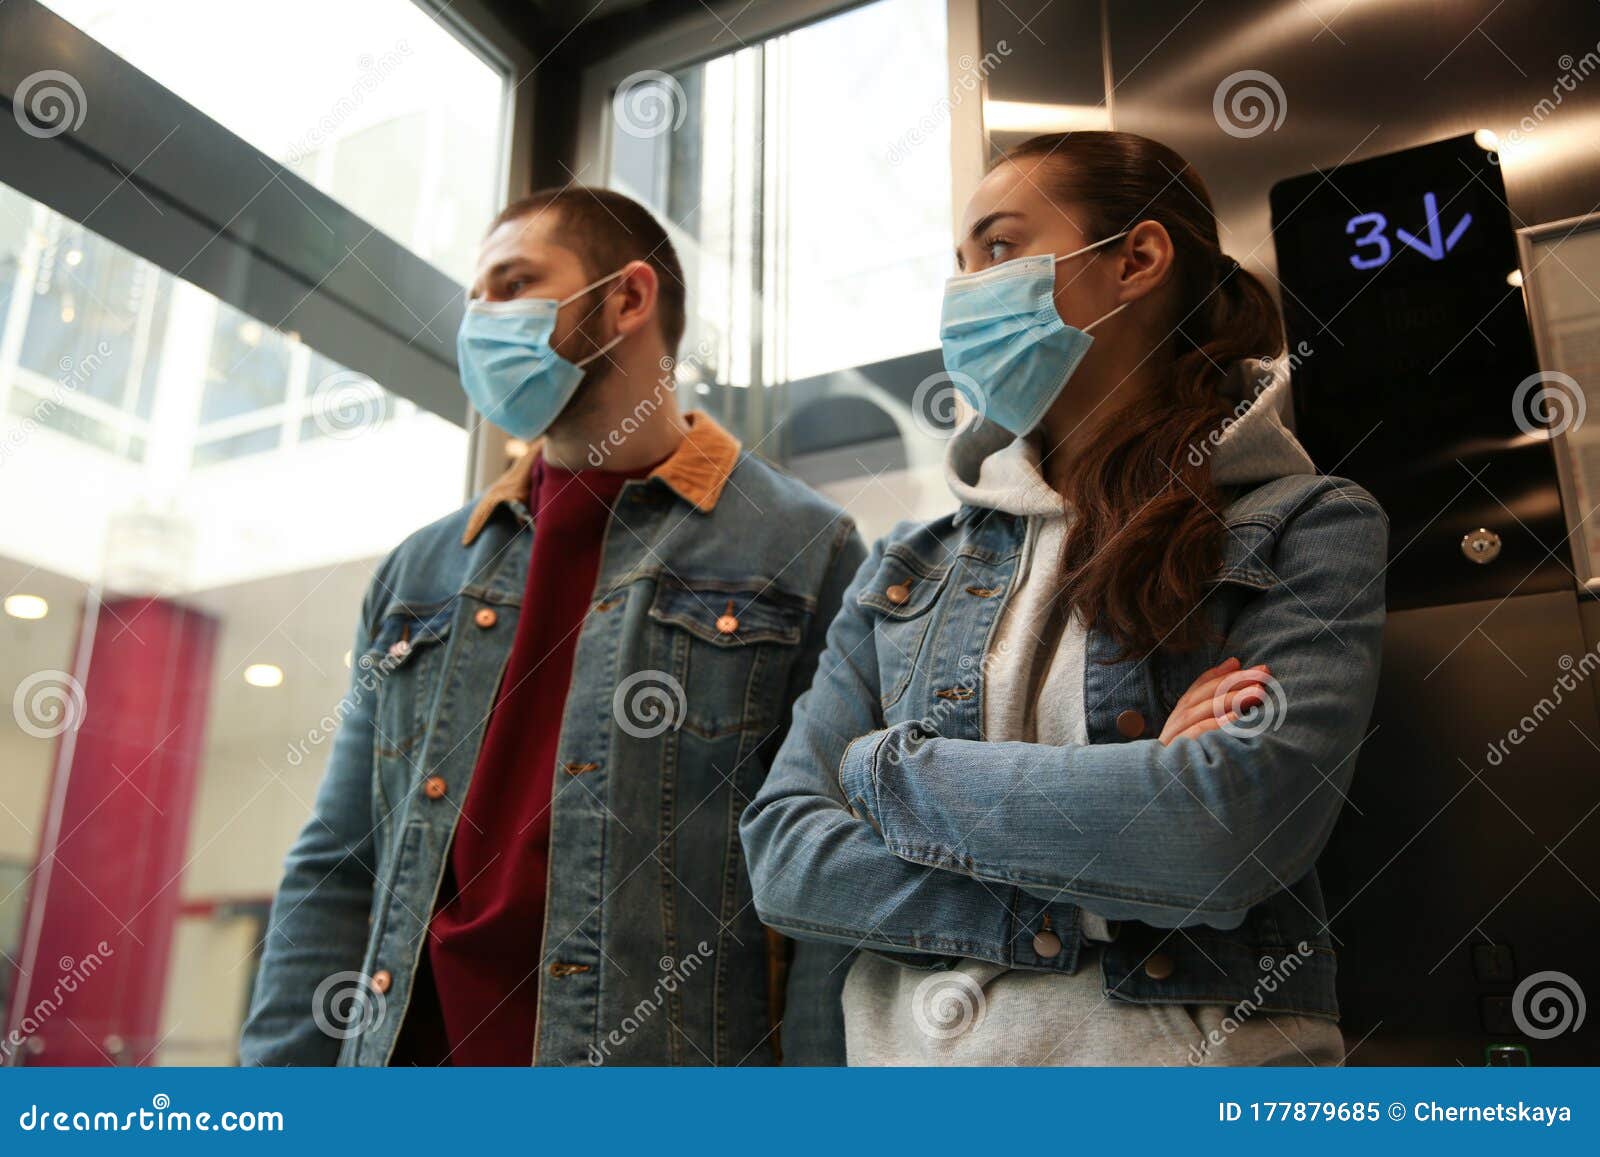 Couple Wearing Masks in Elevator. Dangerous Virus Stock Image - Image ...